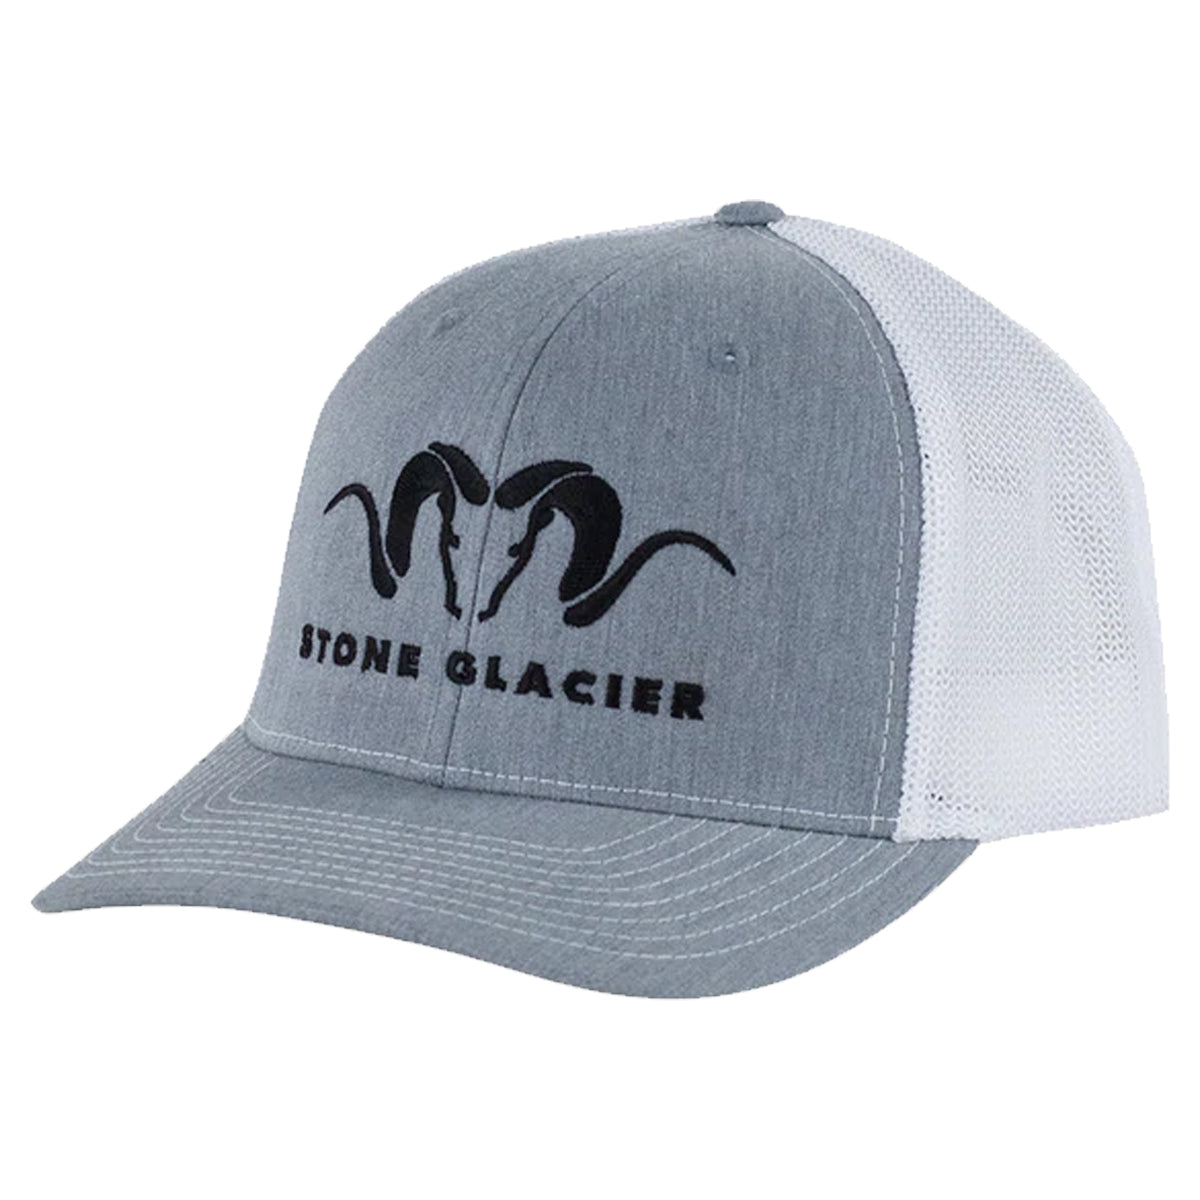 Stone Glacier Full Ram Trucker Hat